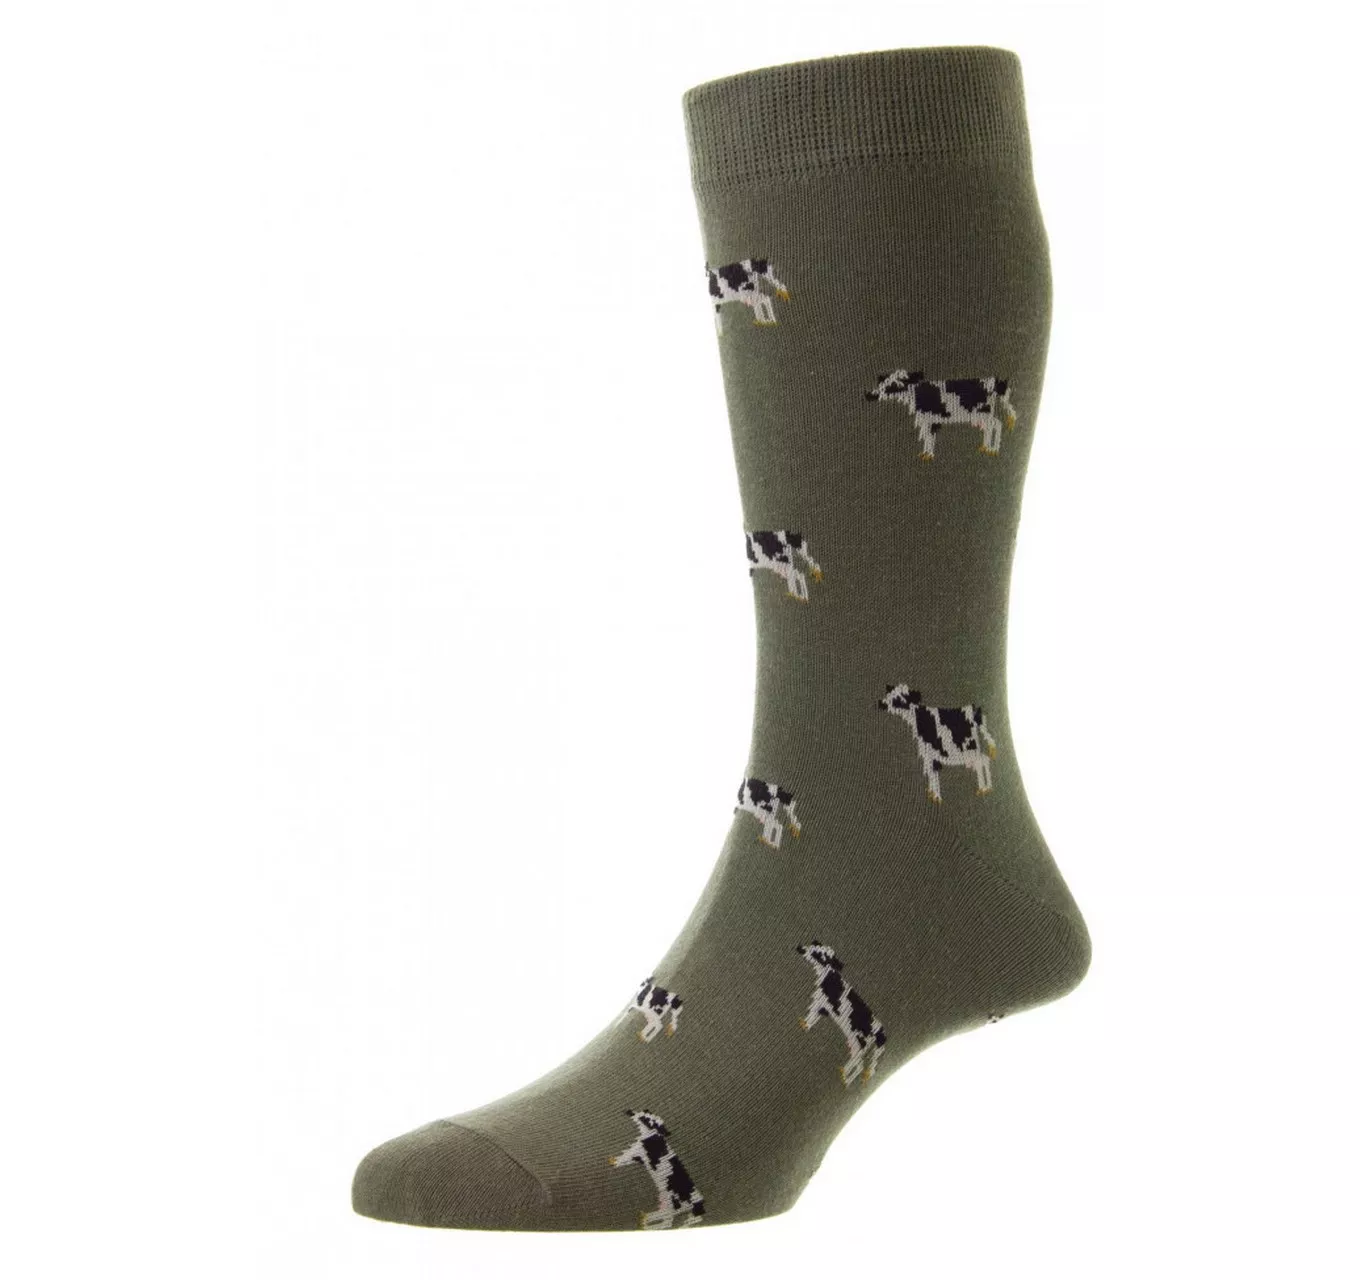 Cow Socks Olive 6-11